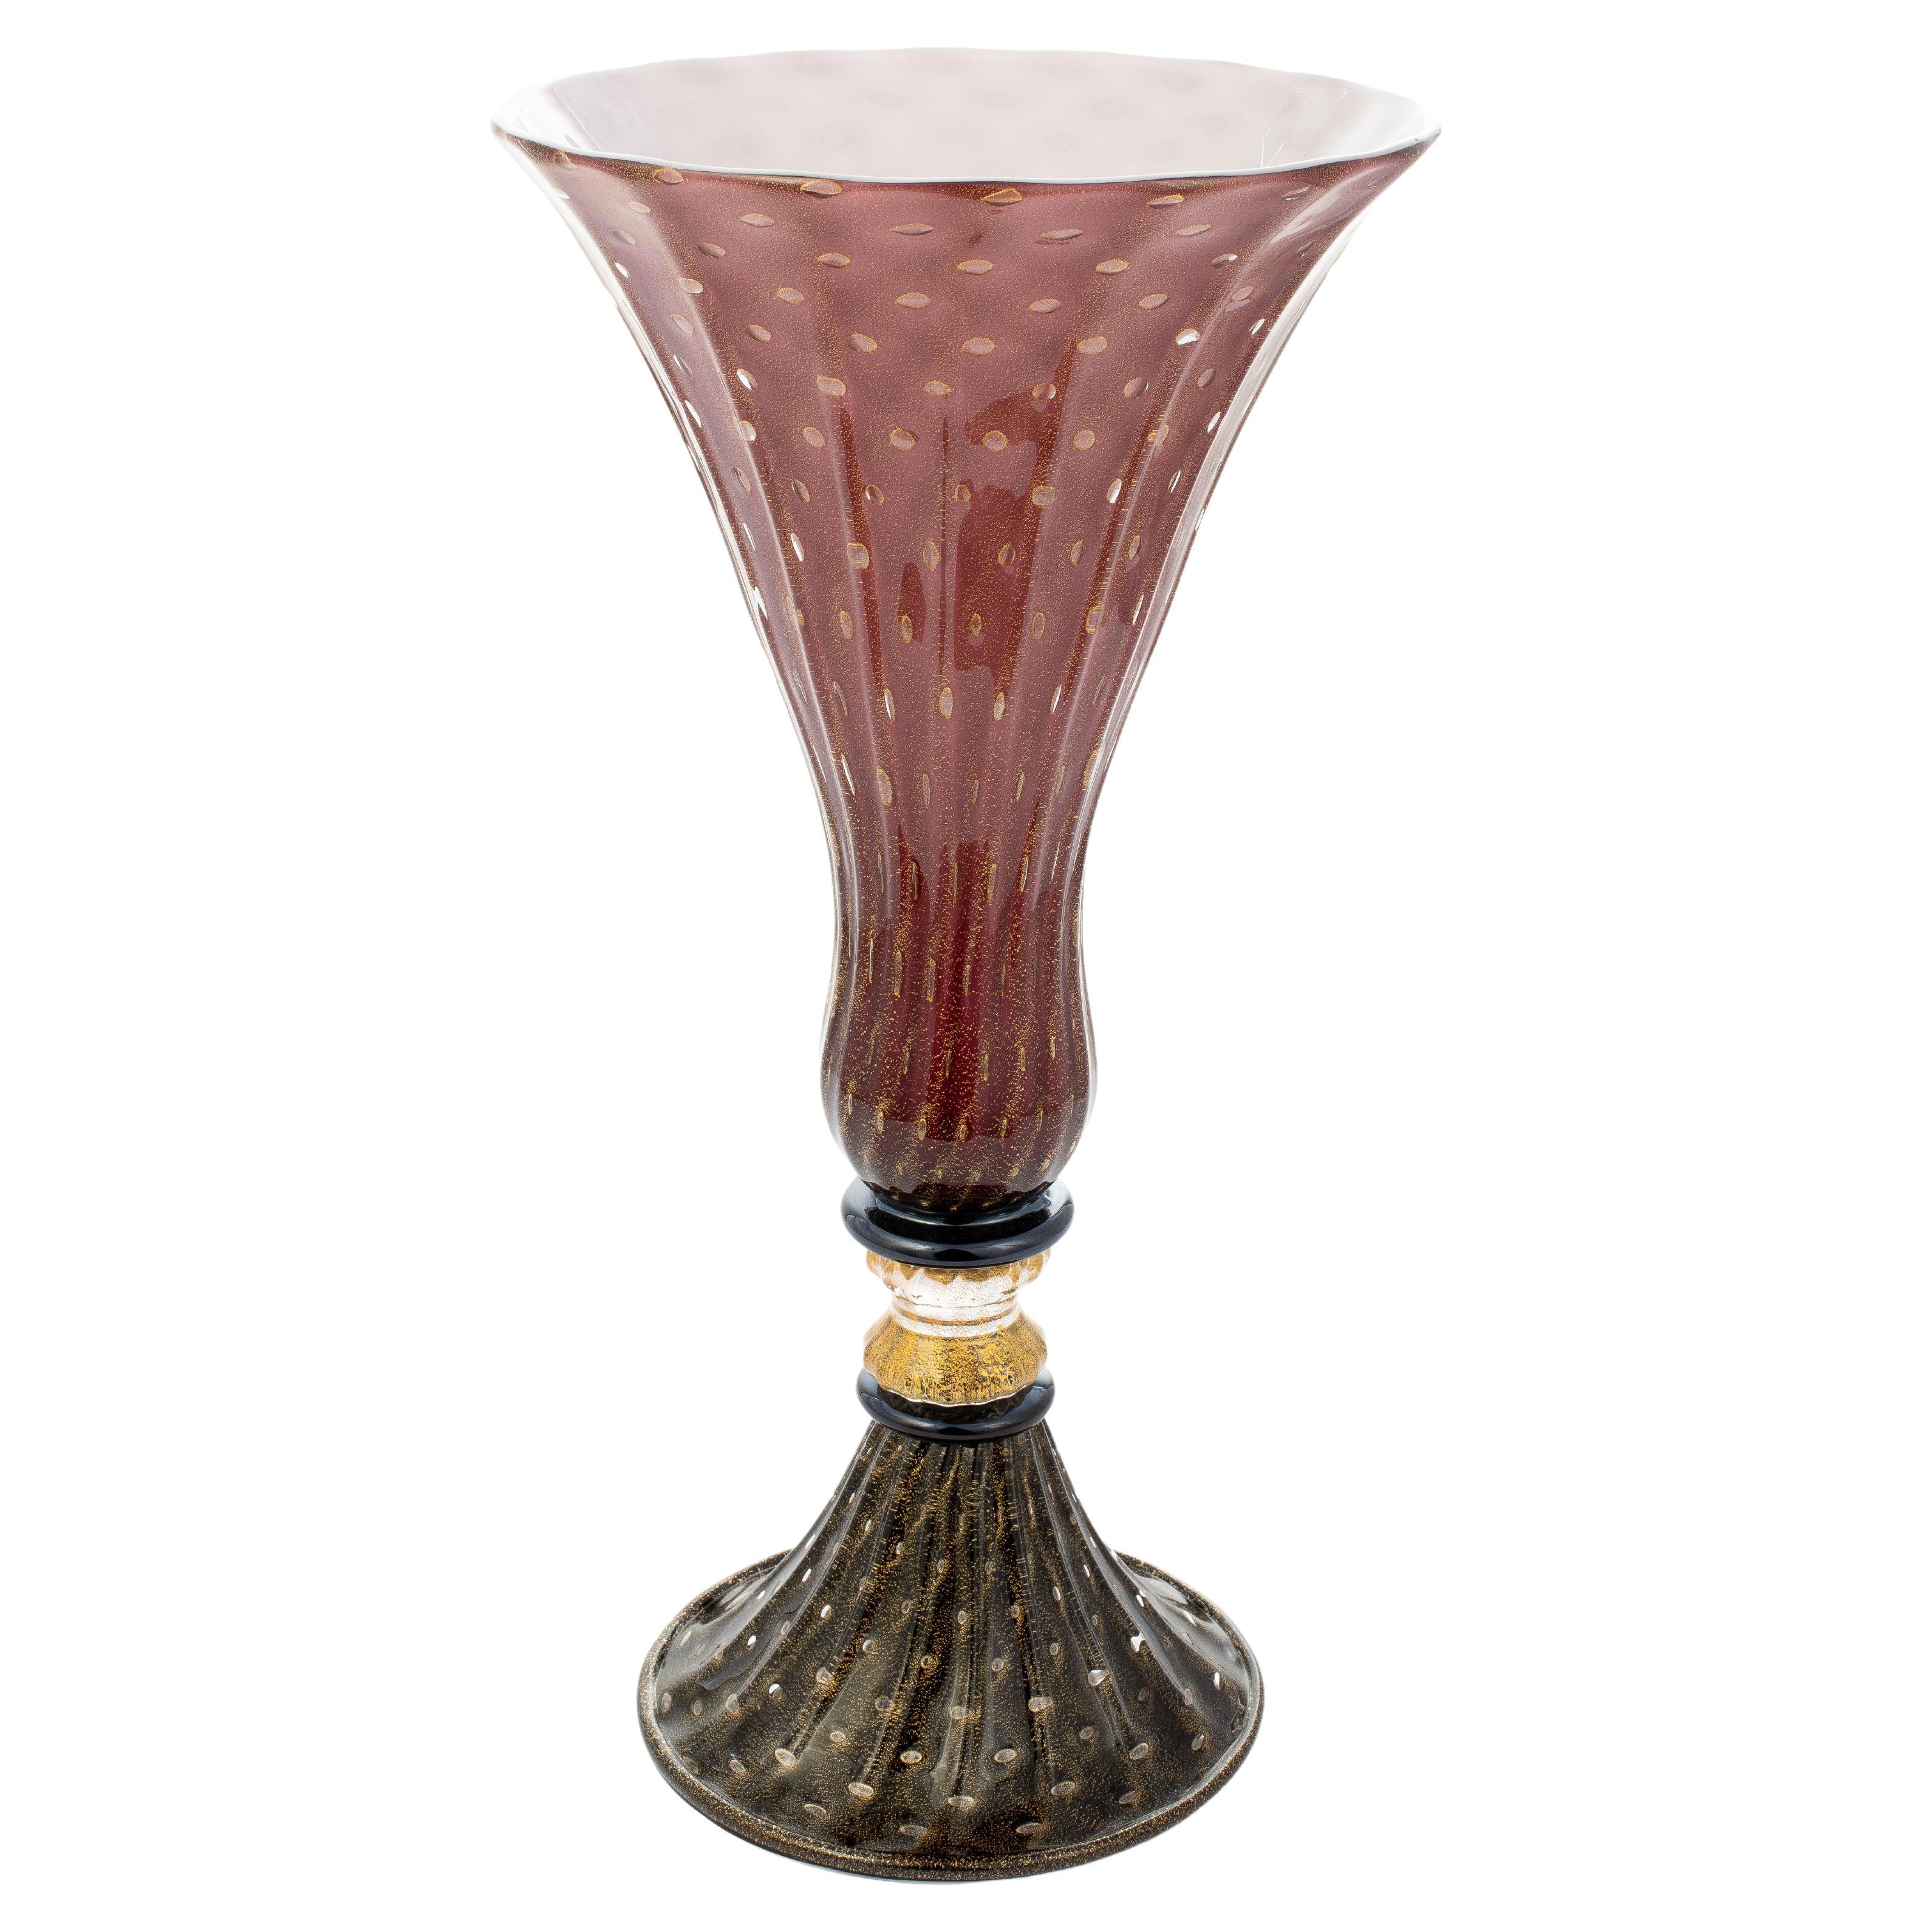 1295 Murano Hand Made Art Glass "Napoleone a Venezia" Vase Ltd For Sale